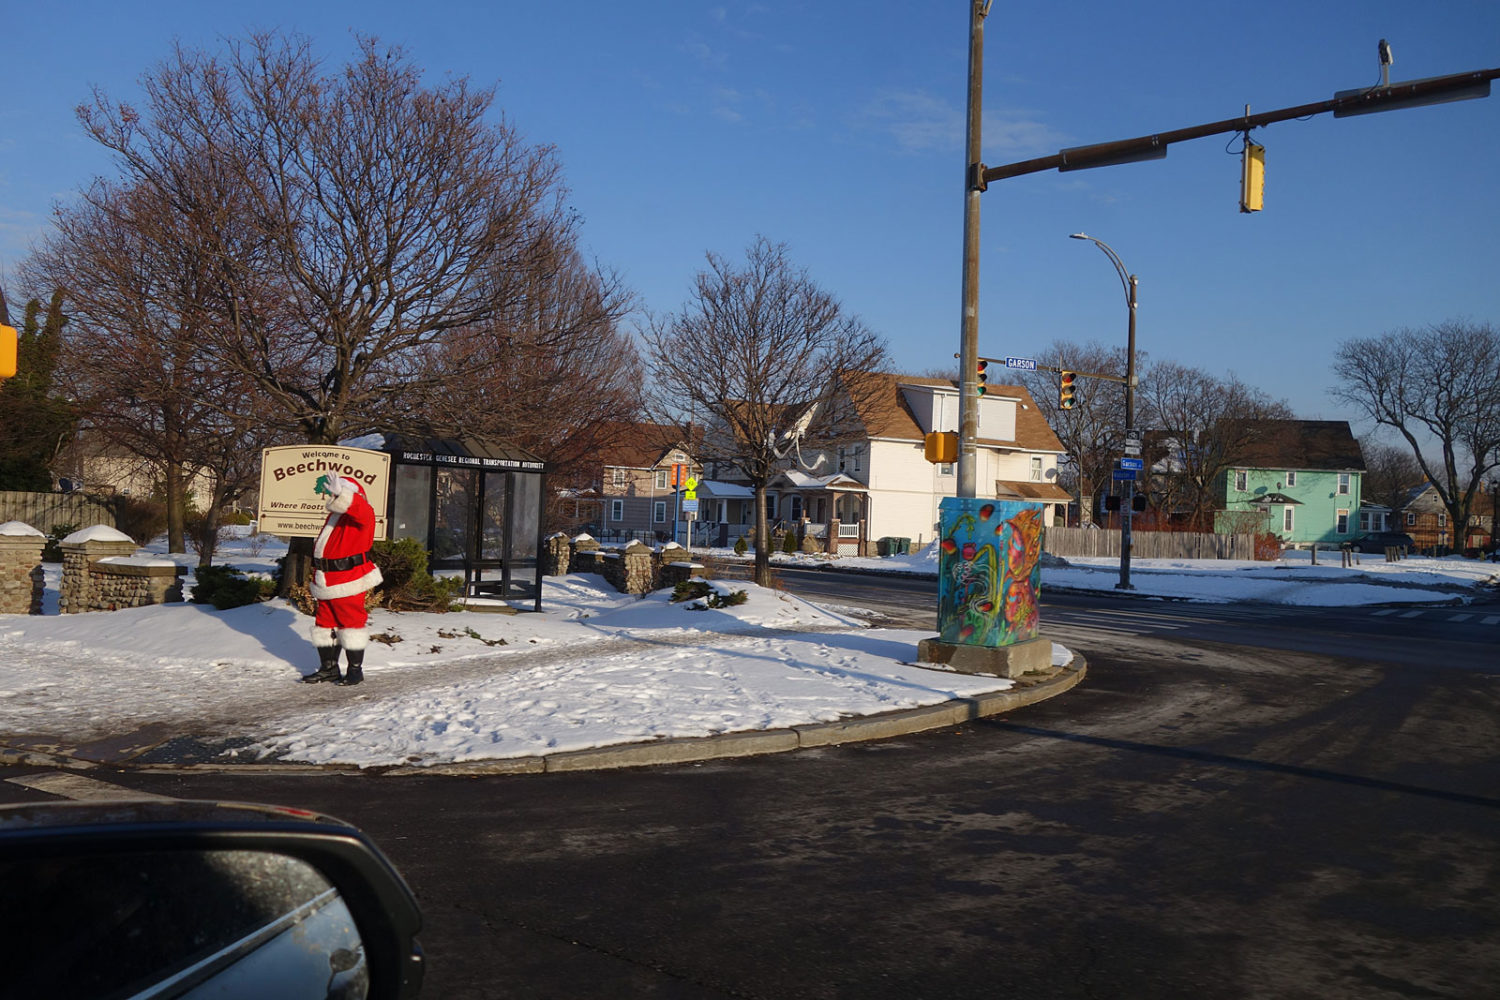 Santa on the corner of Garson and Goodman in Rochester, New York